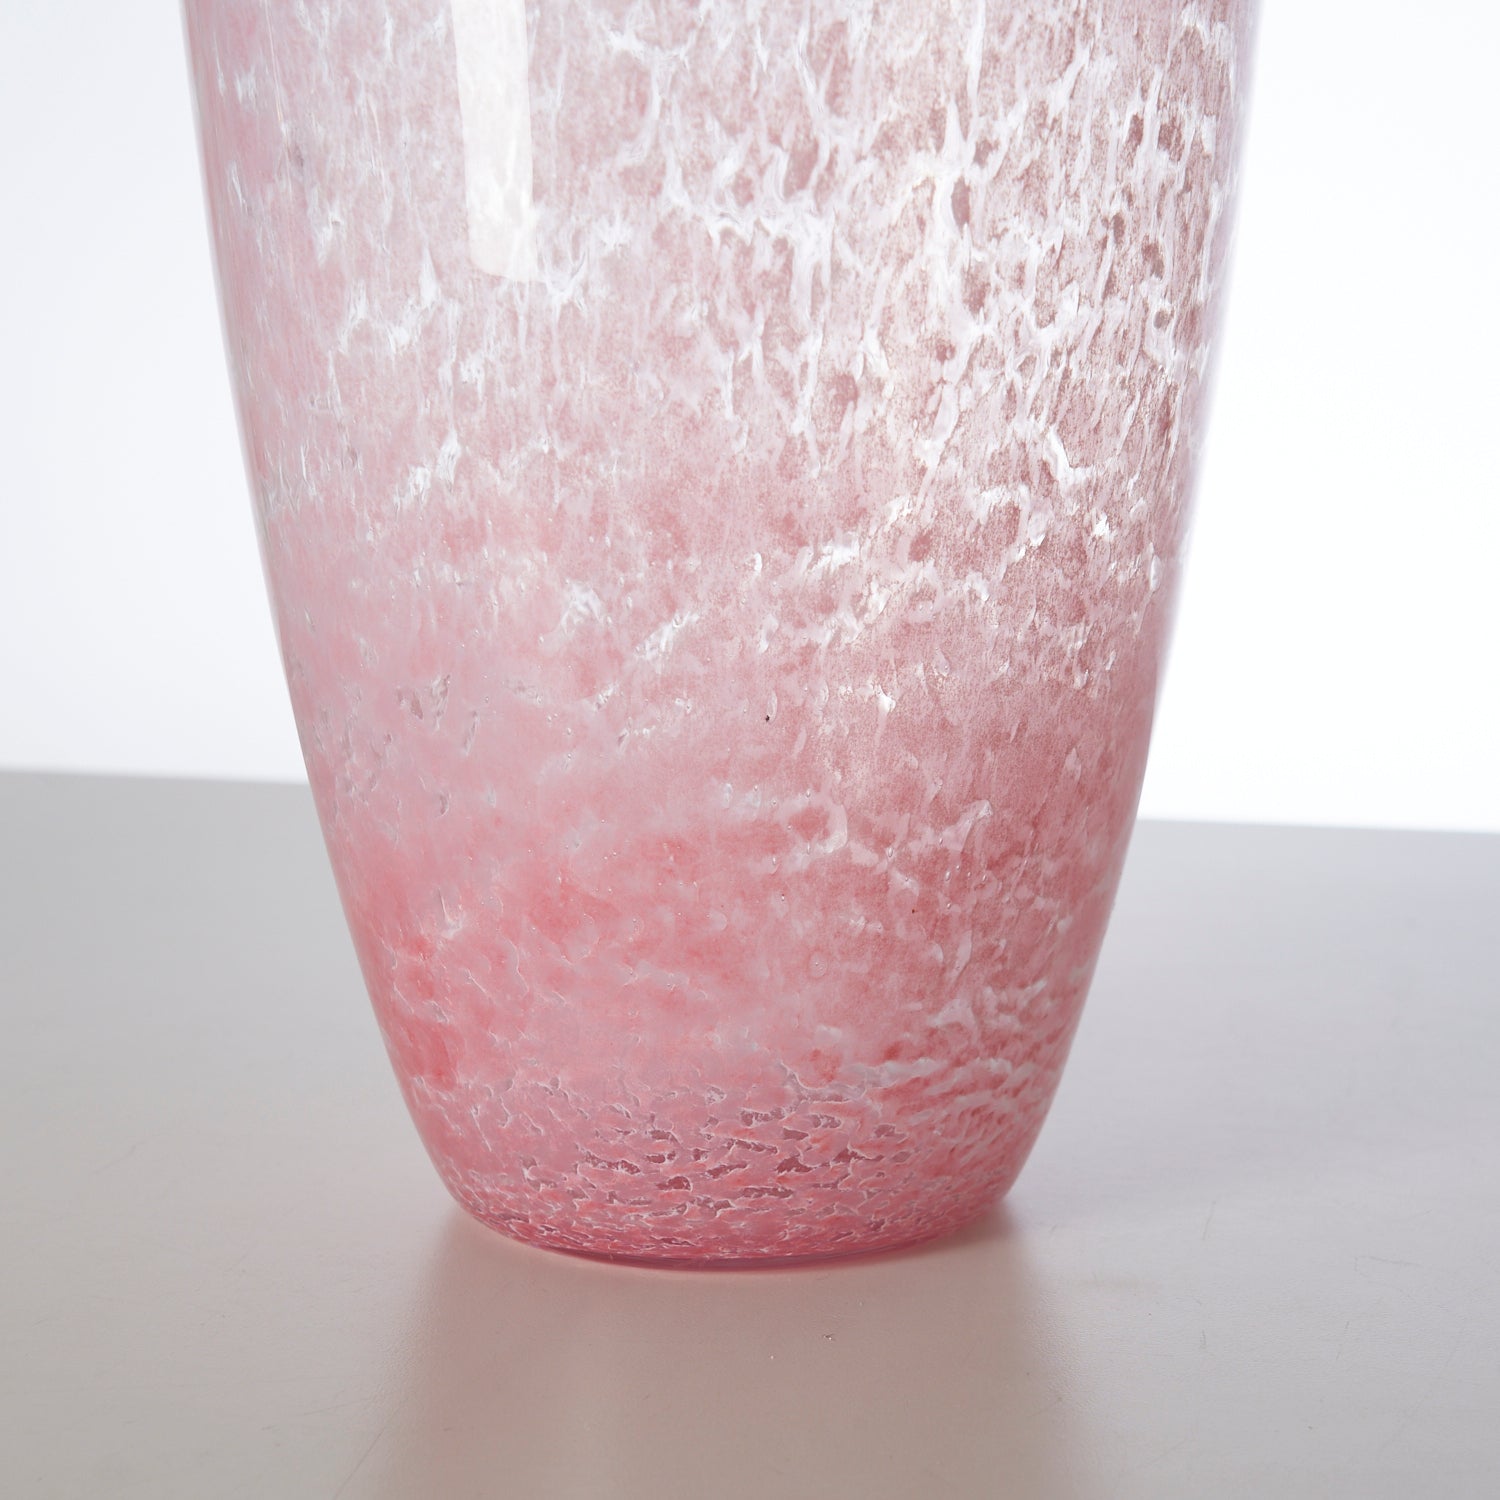 Large Art Glass Vase